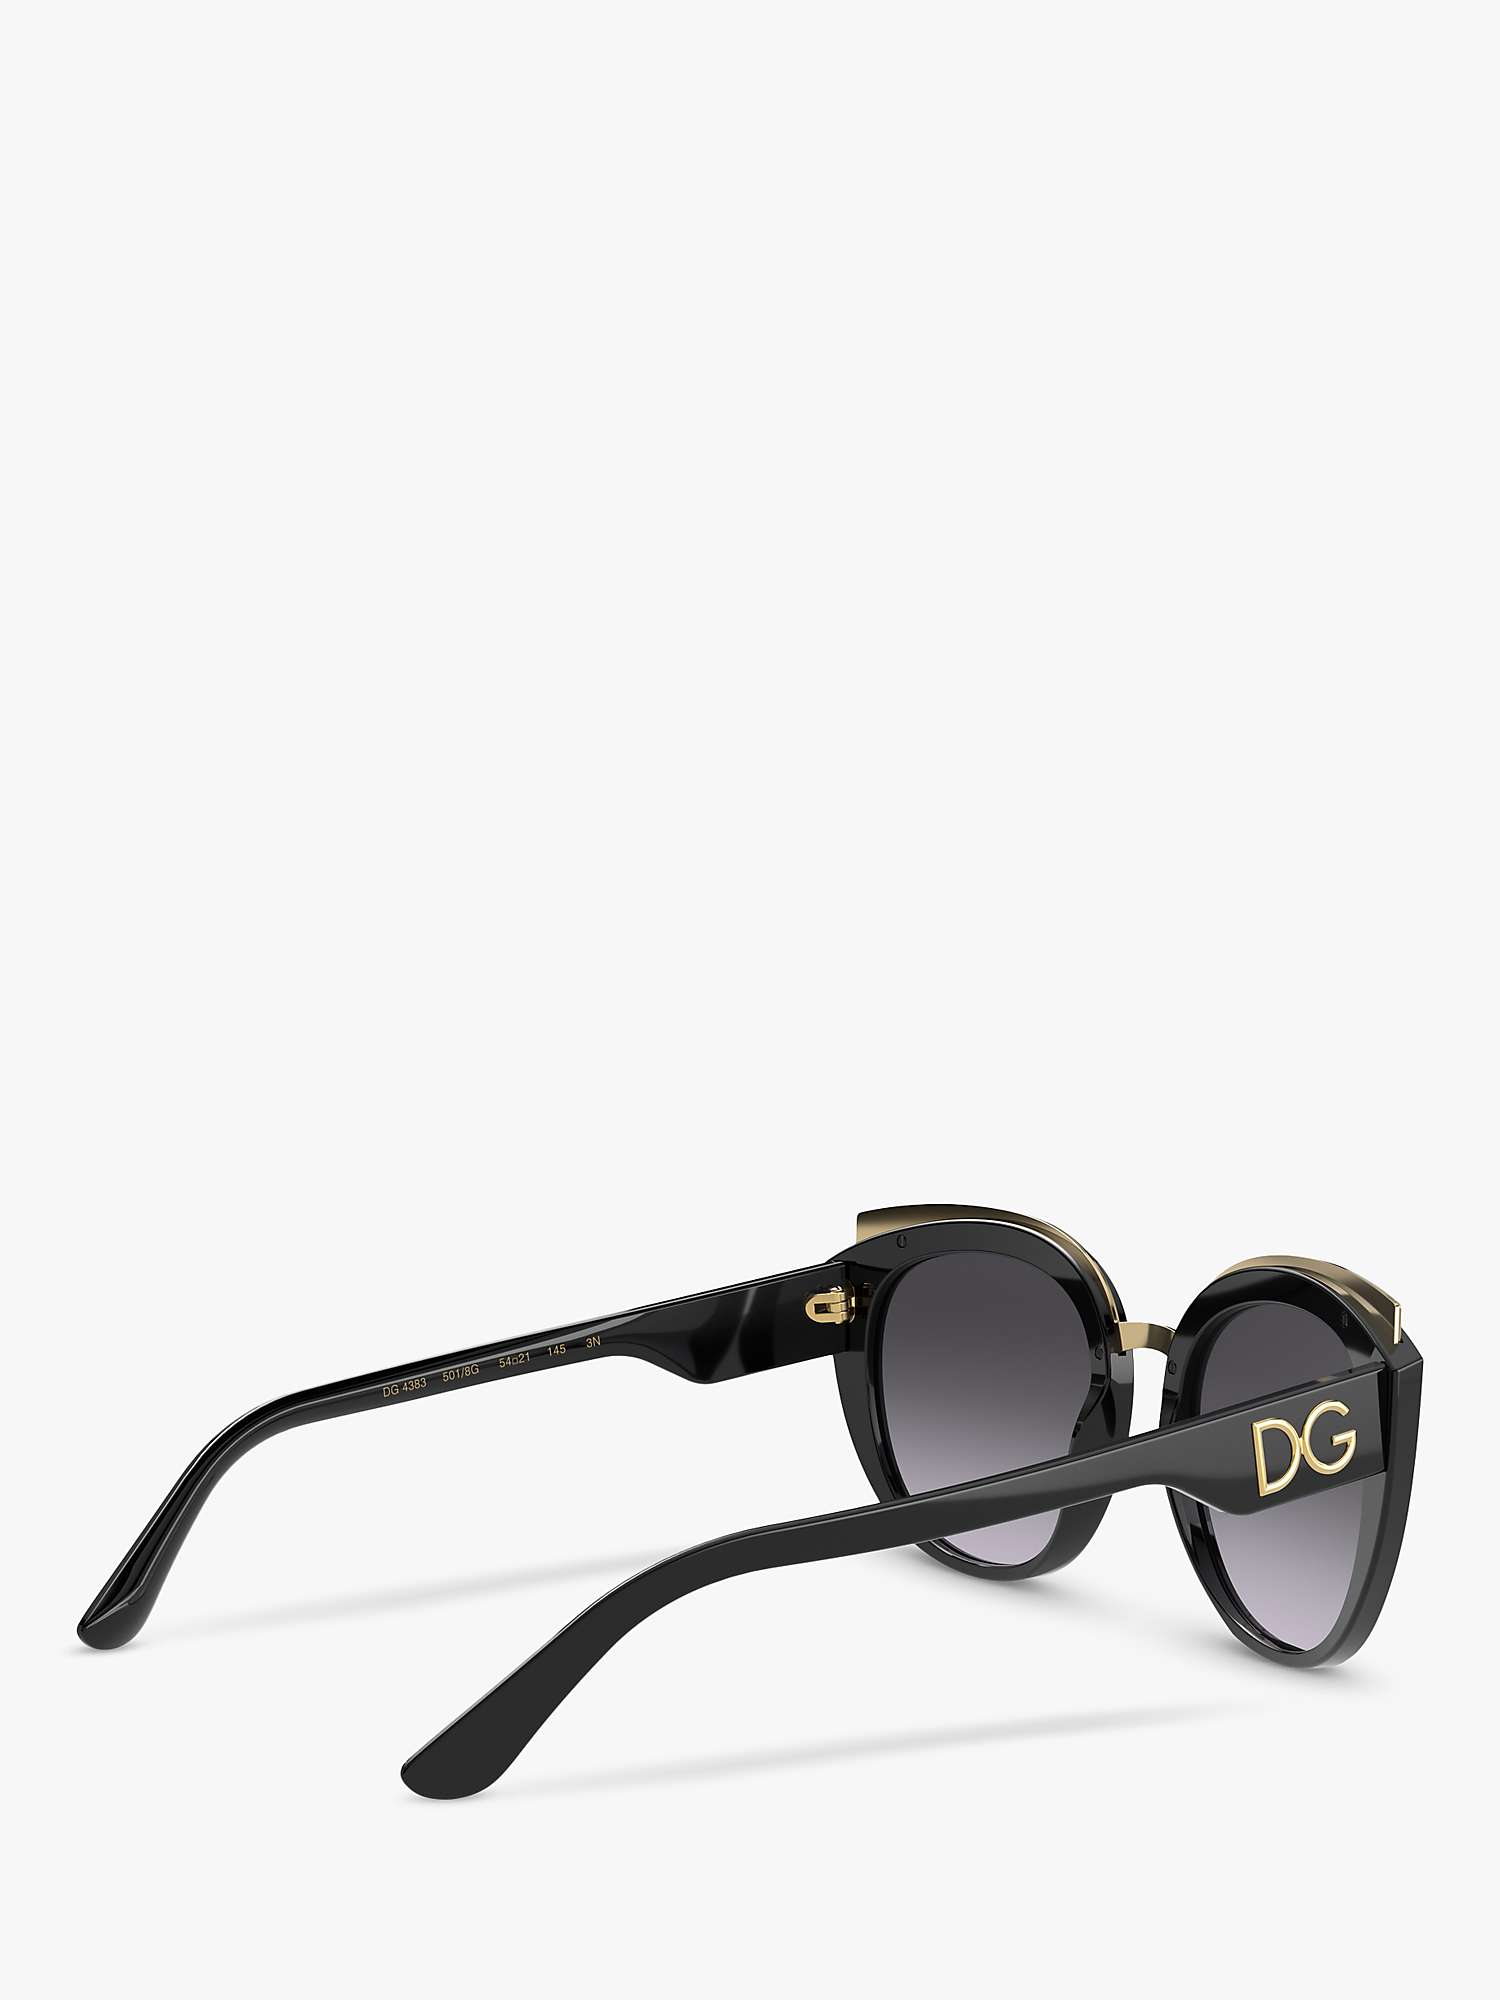 Buy Dolce & Gabbana DG4383 Women's Butterfly Sunglasses Online at johnlewis.com